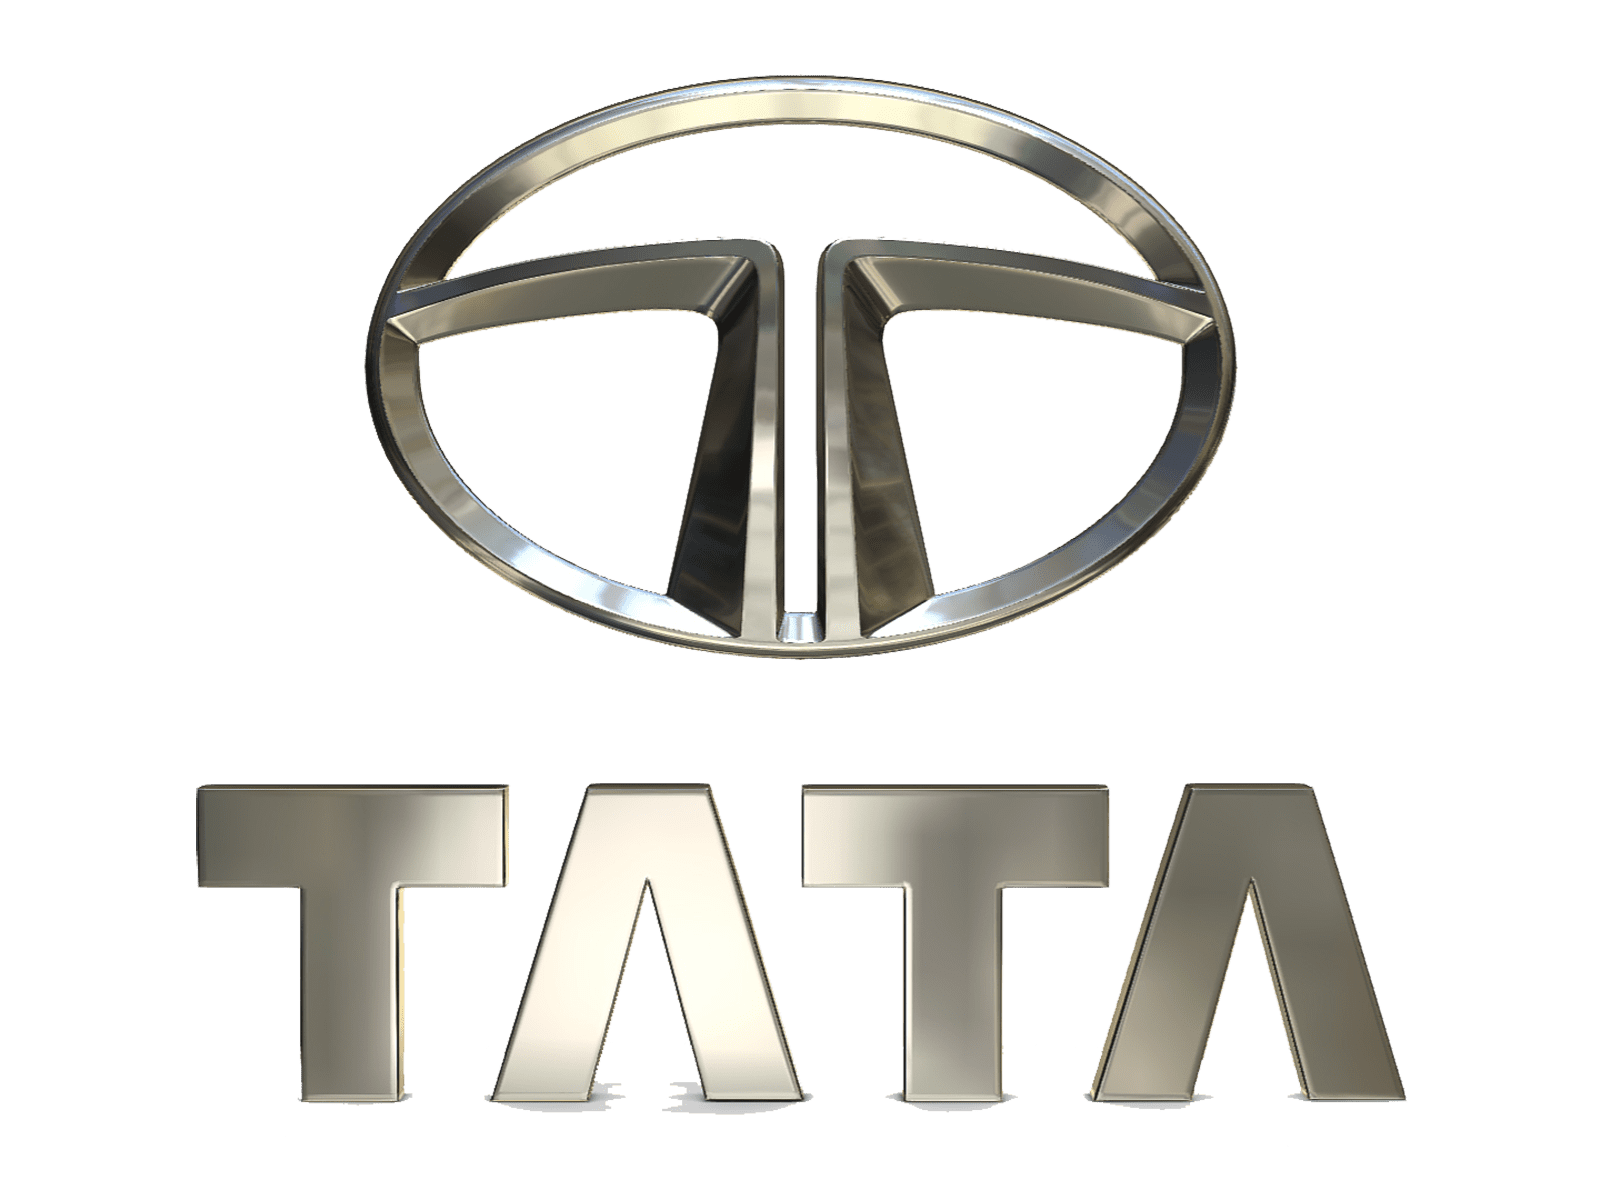 Tata Motors to launch premium hatchback Altroz in mid-2019